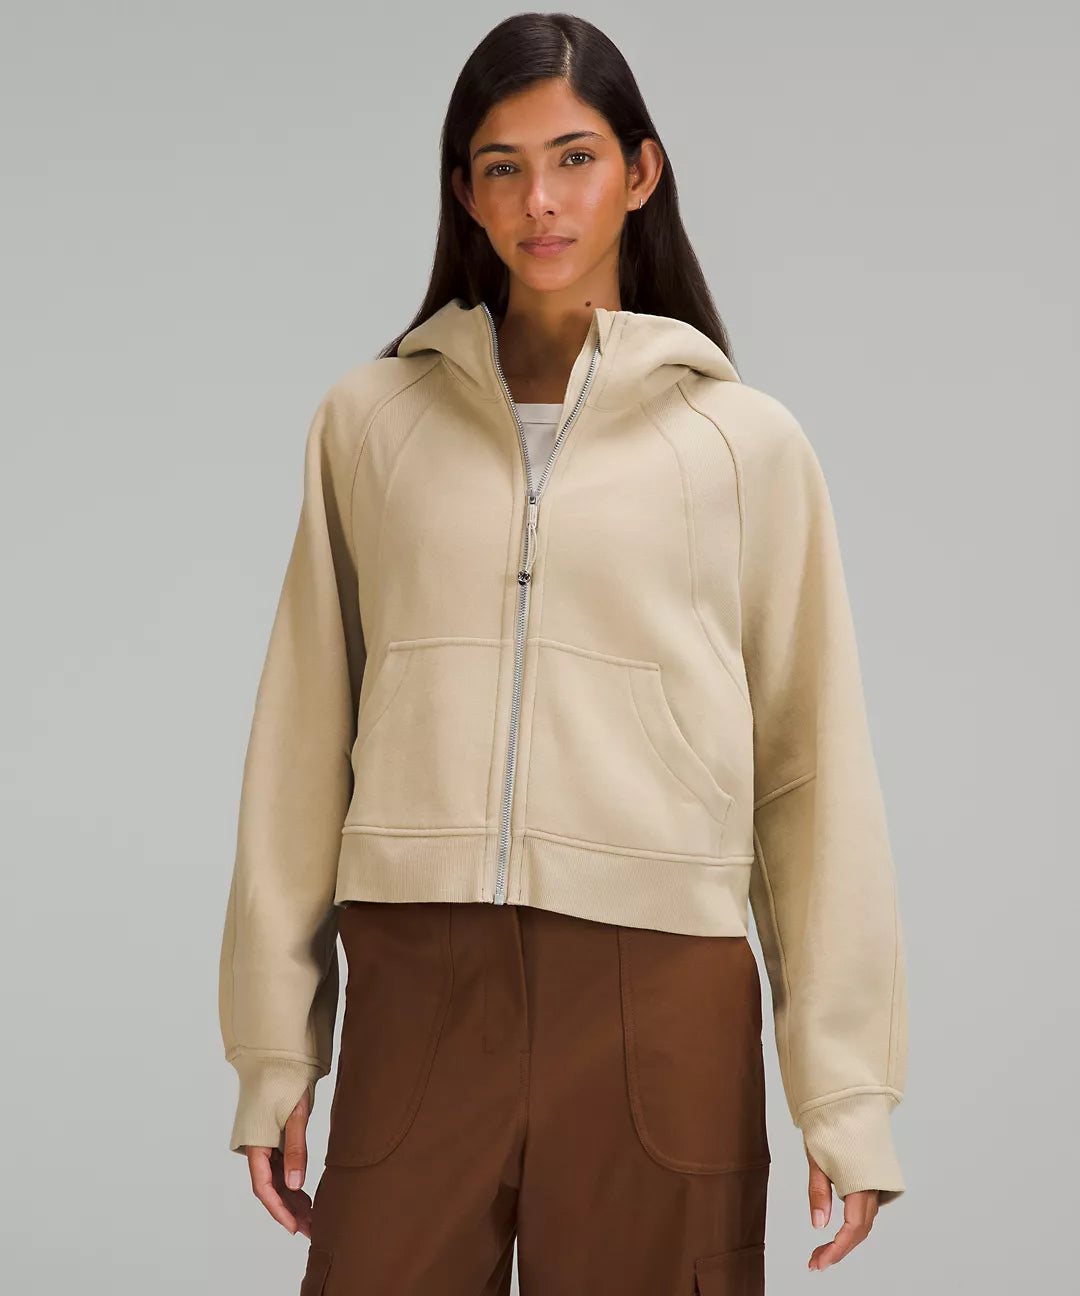 Full-zipper scuba fleece hoodie